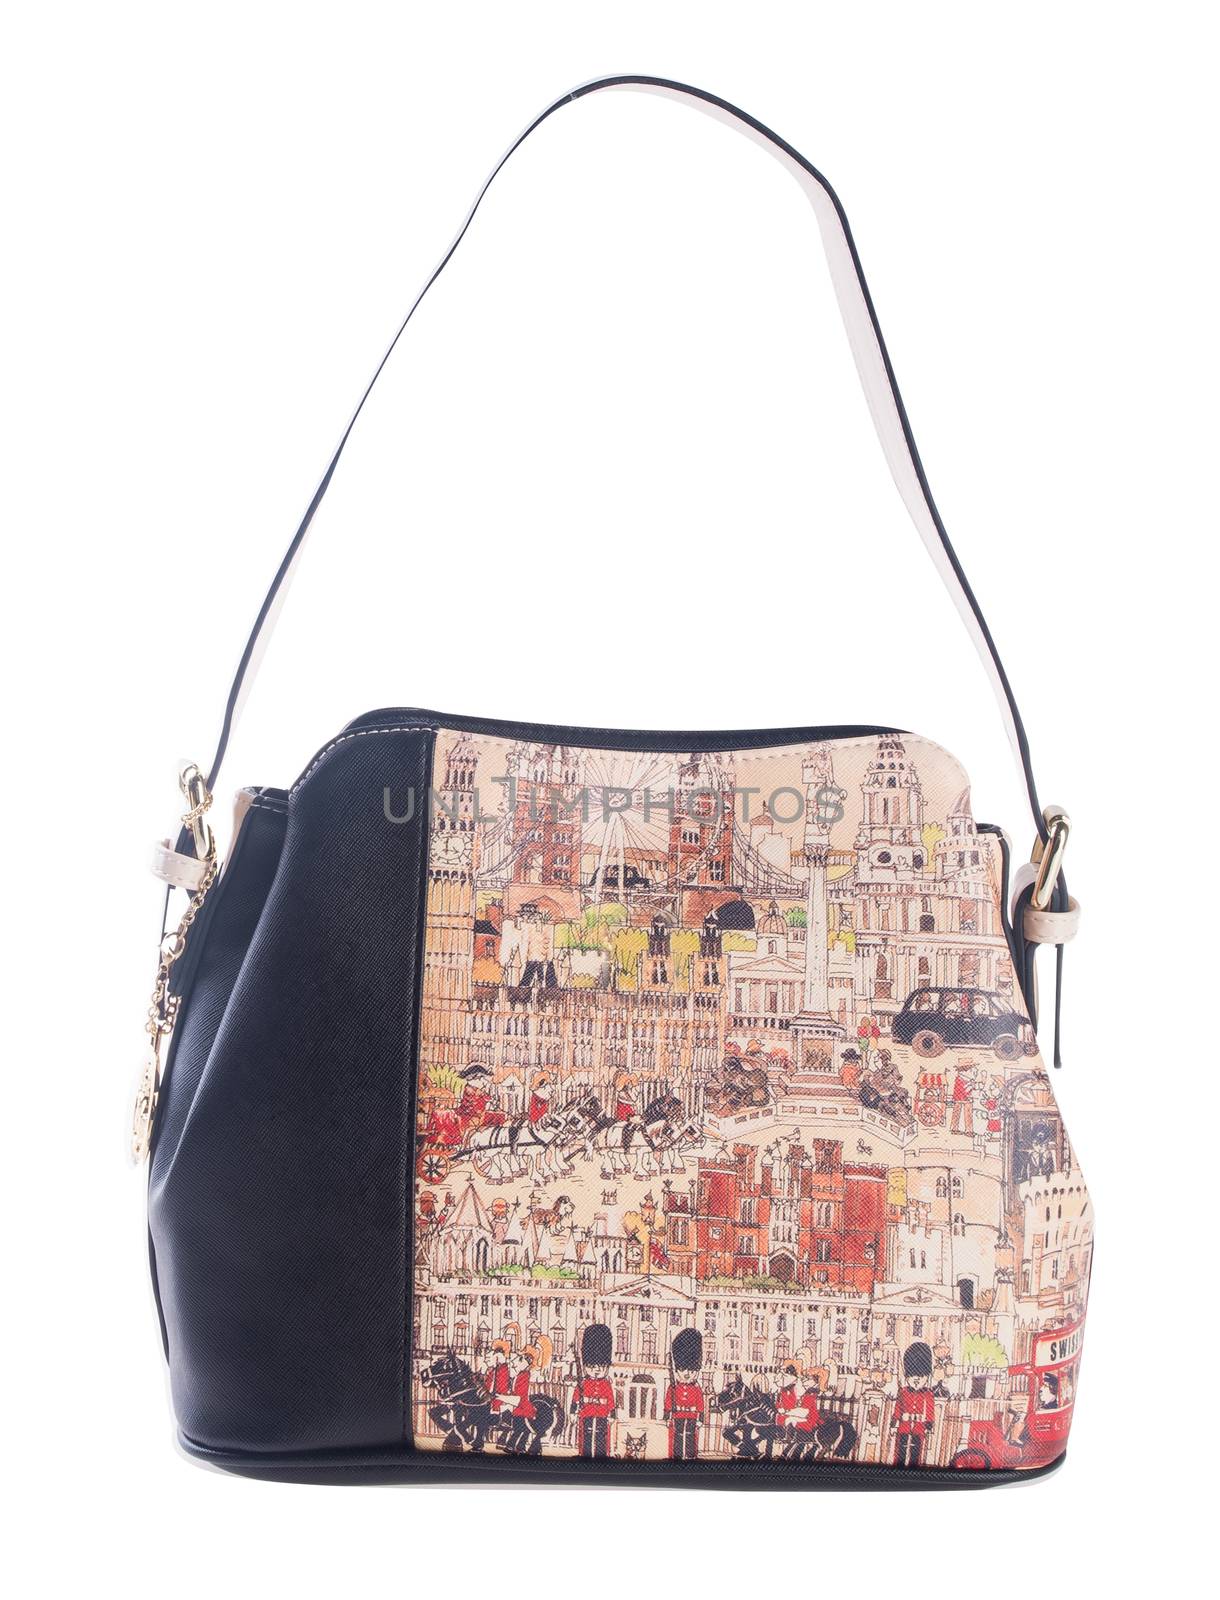 woman's handbag on a background by heinteh